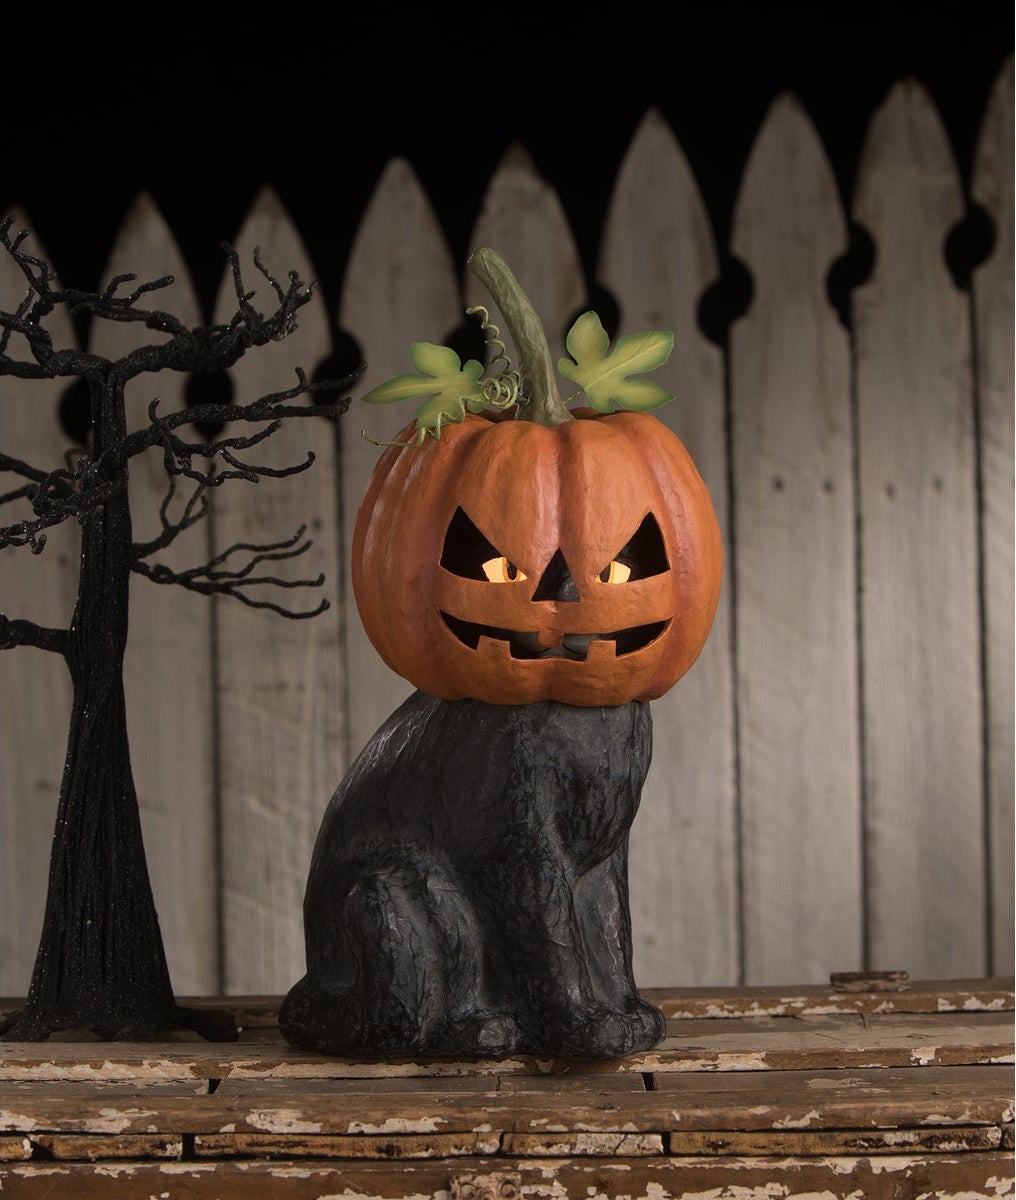 Black Cat Jack O'Lantern with removable pumpkin head